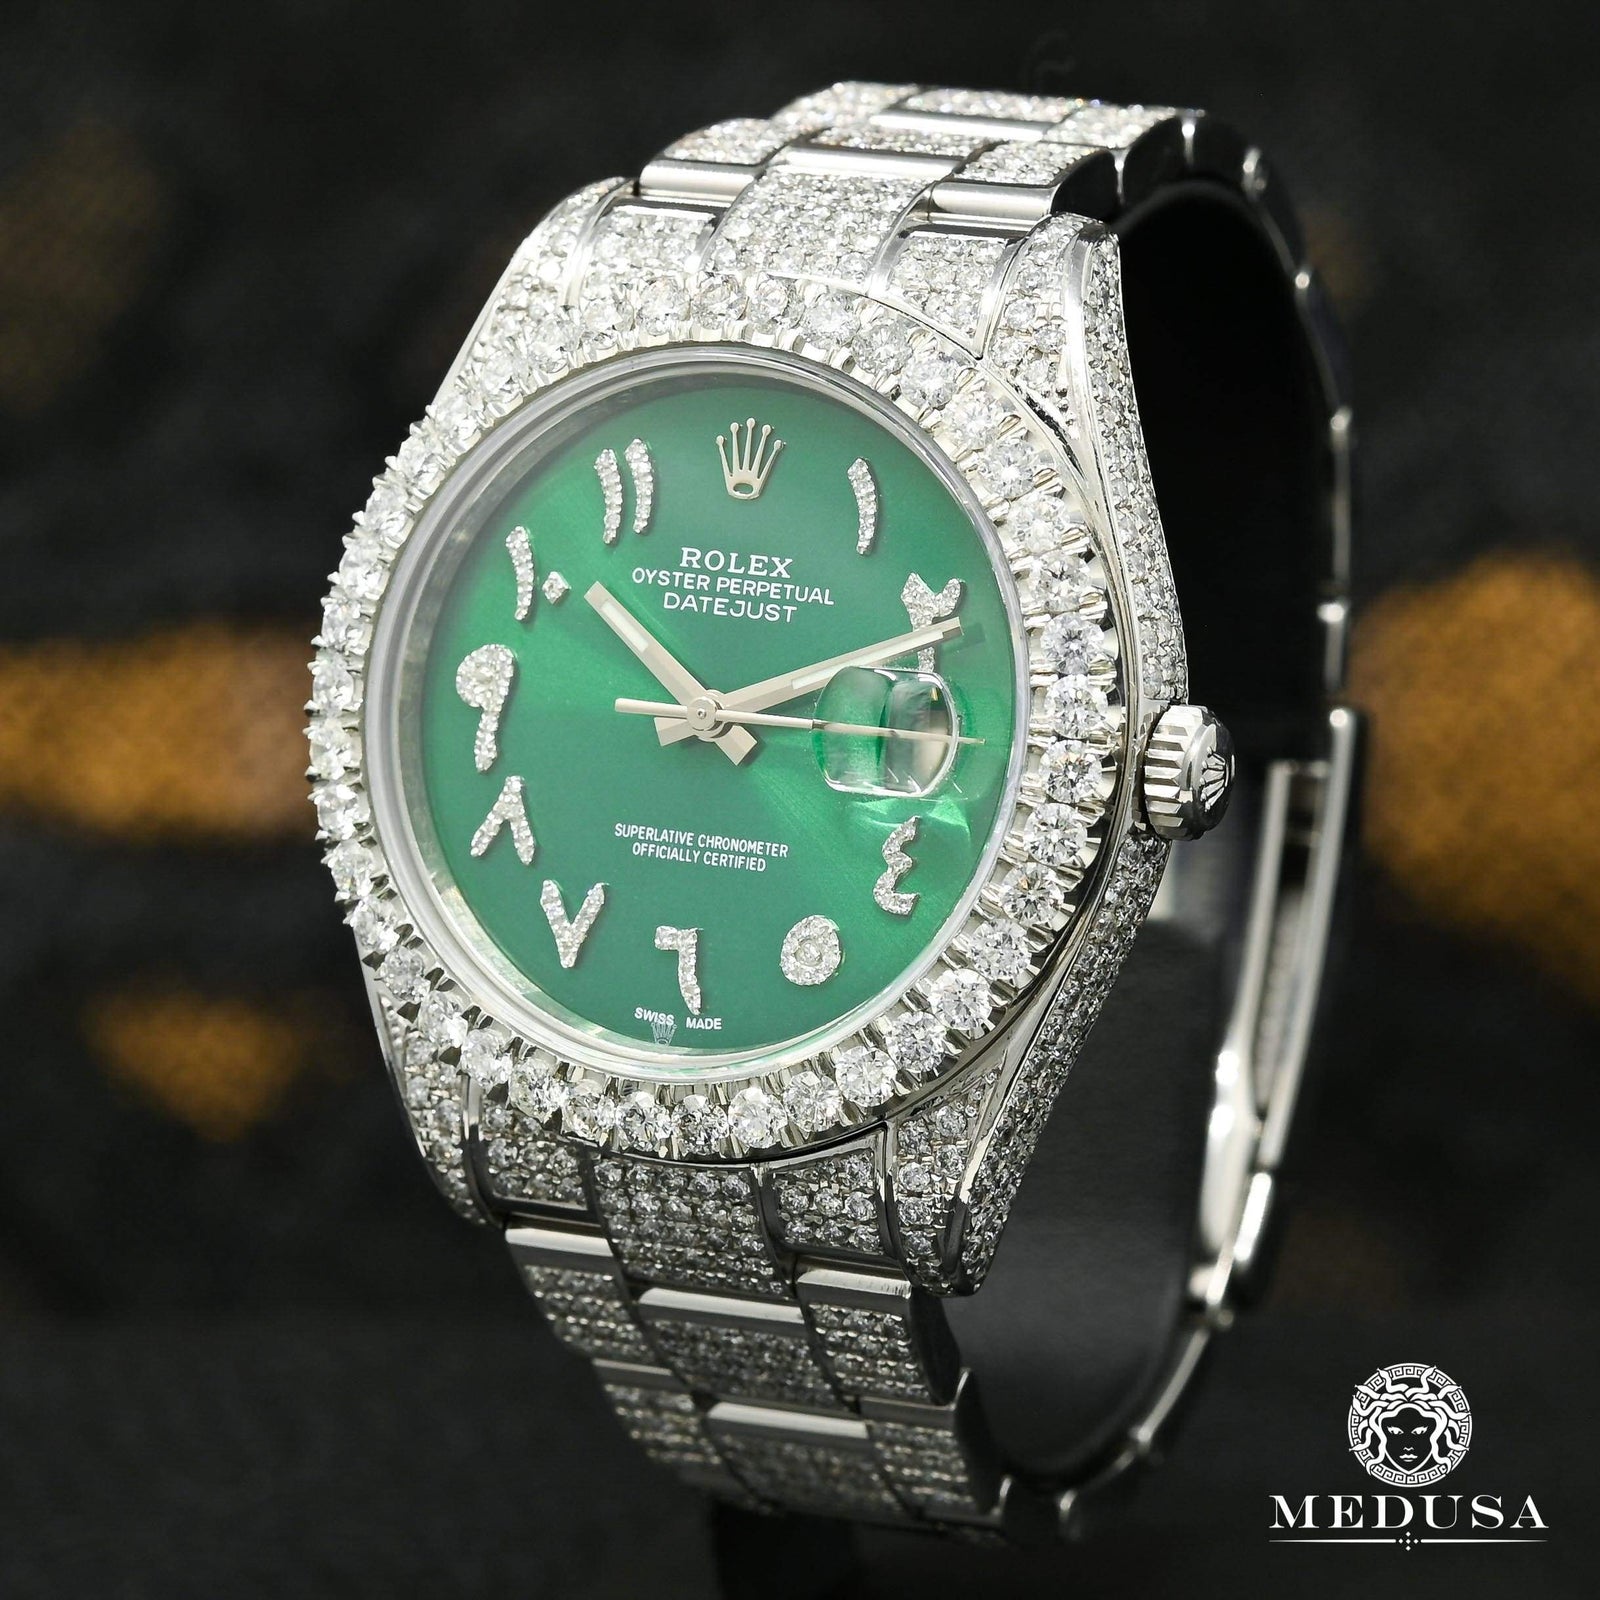 Rolex watches - Medusa Jewelry